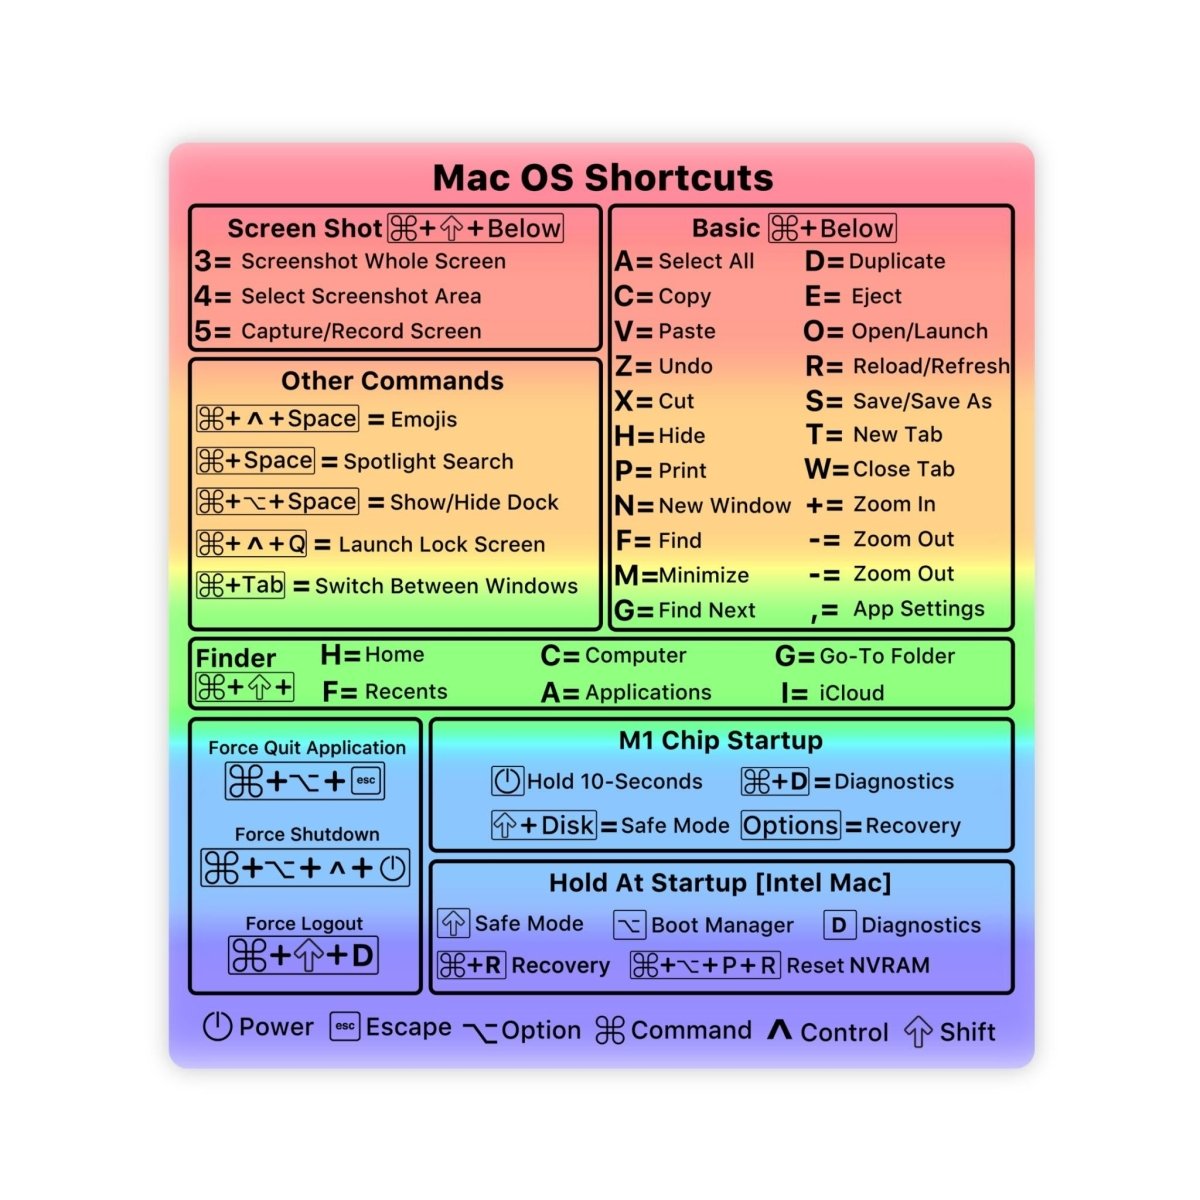 [M1/M2/Intel] Pastel Mac OS Shortcut Sticker [Works With All Mac Laptops] - stickerbull[M1/M2/Intel] Pastel Mac OS Shortcut Sticker [Works With All Mac Laptops]Retail StickerstickerbullstickerbullTaylor_PastelMac [#76]Pastel[M1/M2/Intel] Pastel Mac OS Shortcut Sticker [Works With All Mac Laptops]